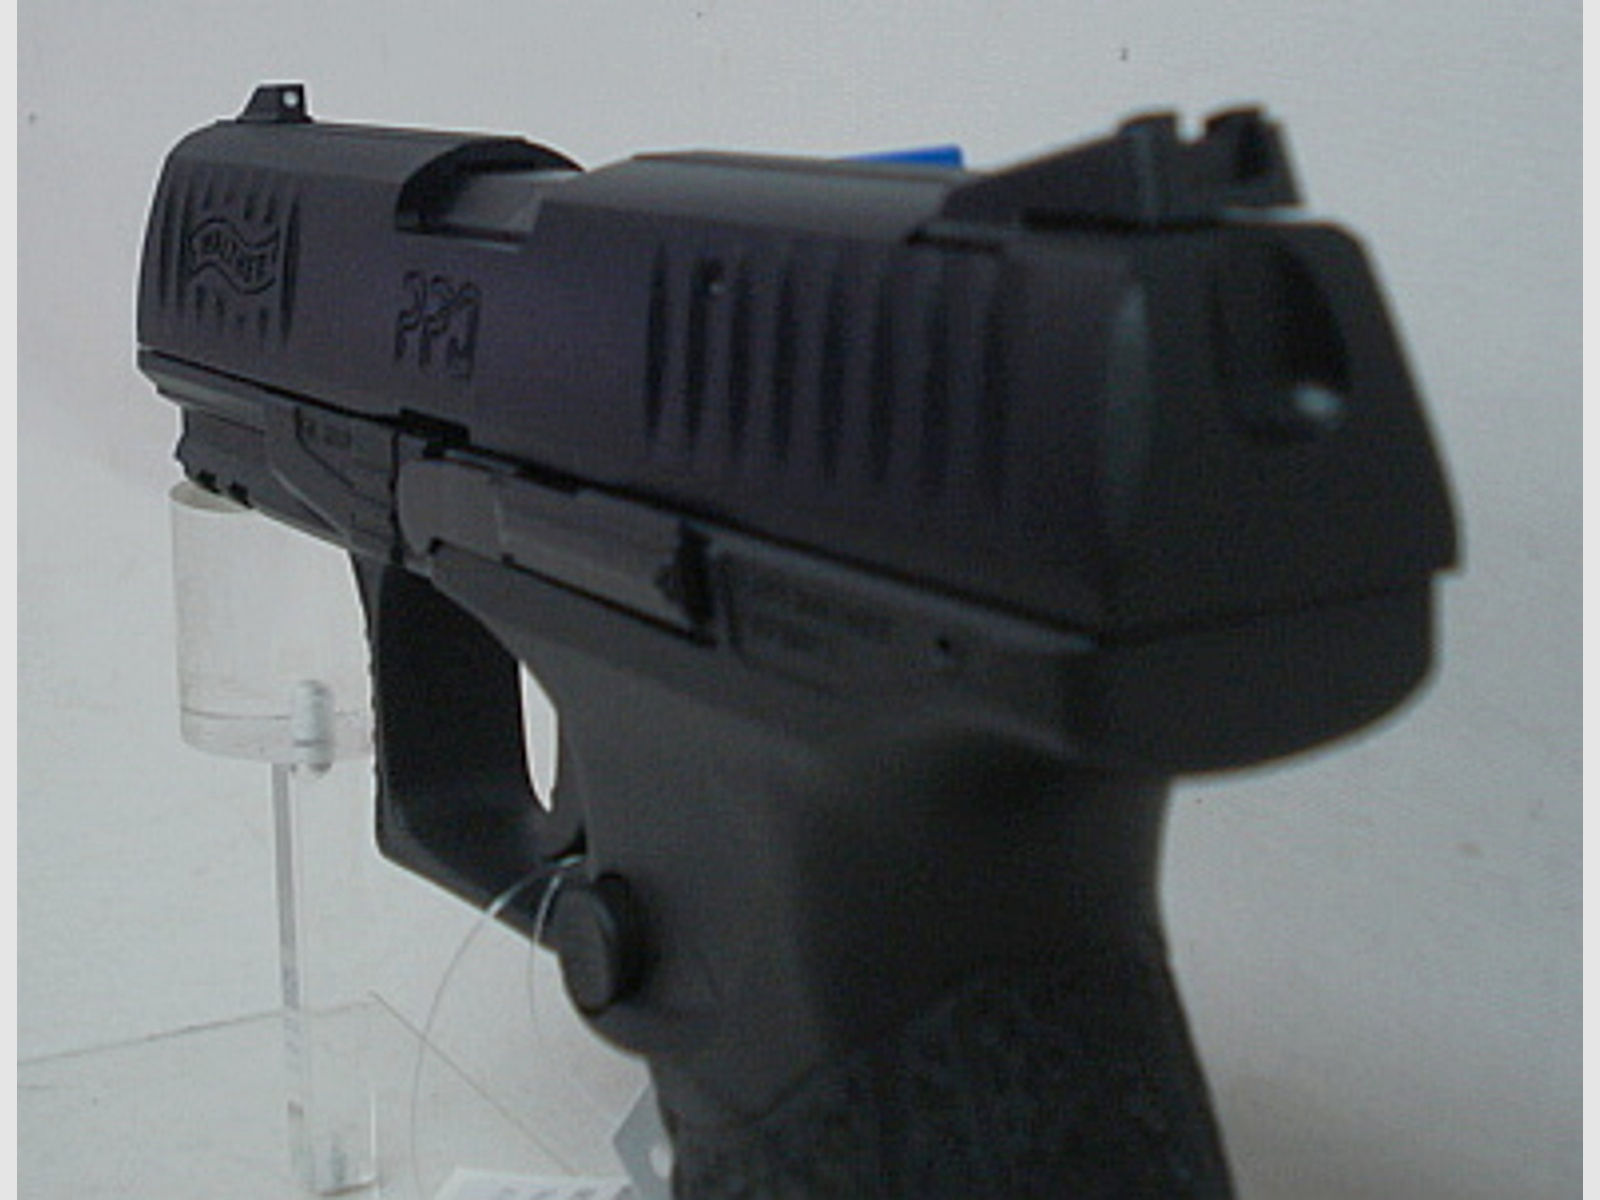 Walther Pistole PPQ M2 - .22lr, LL: 4''